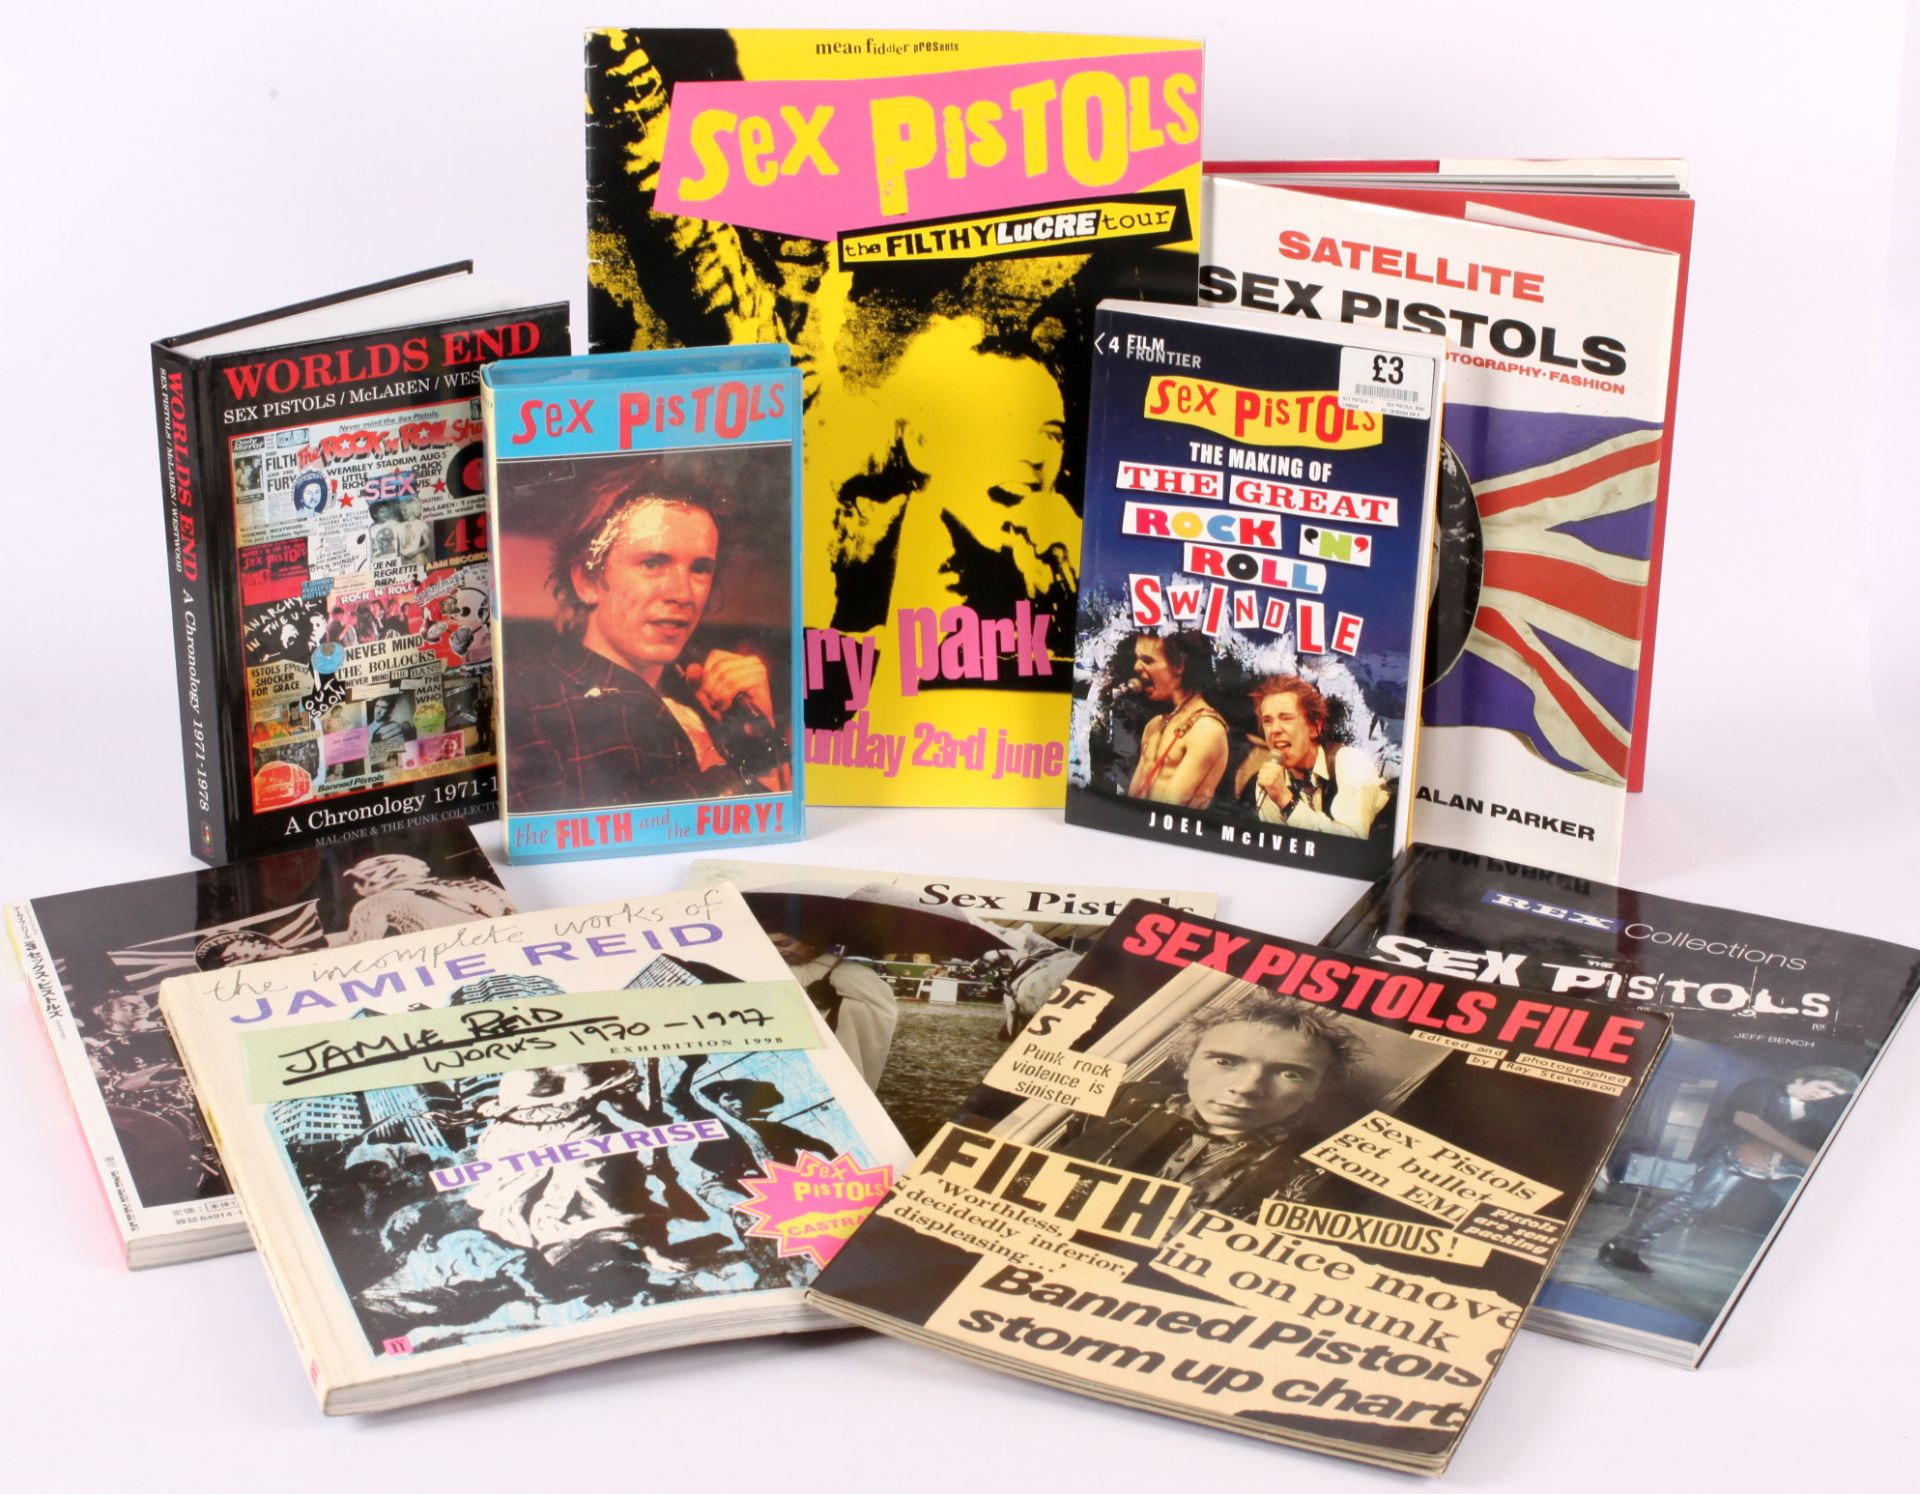 Sex Pistols Related Books And Memorabilia